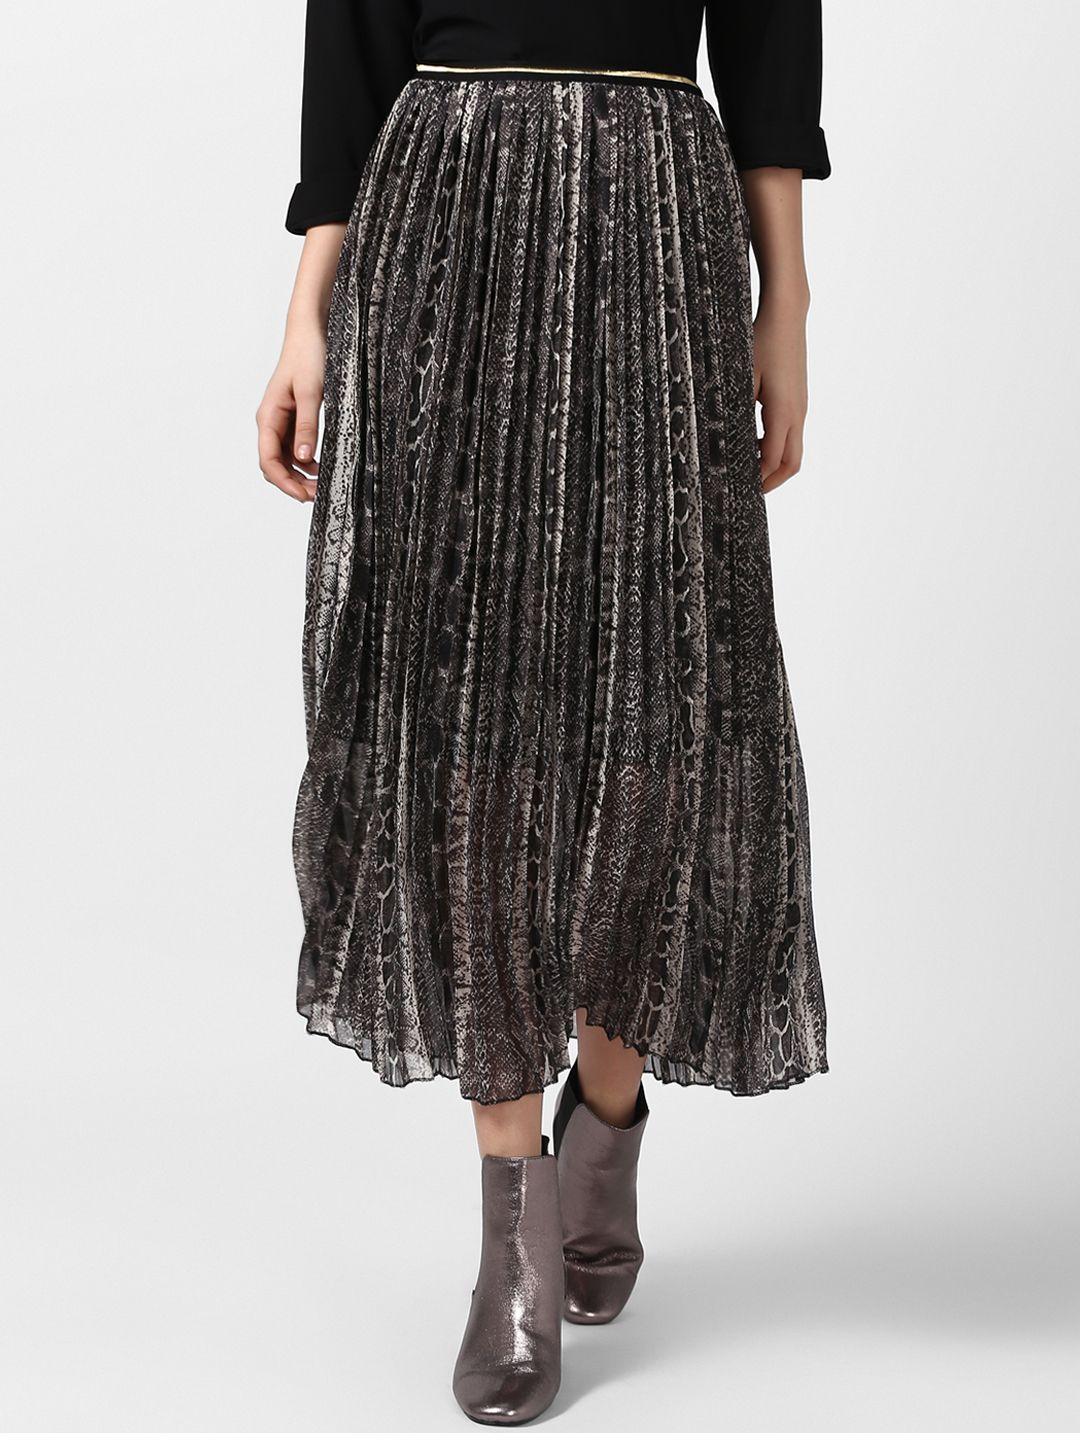 stylestone black printed a-line skirt